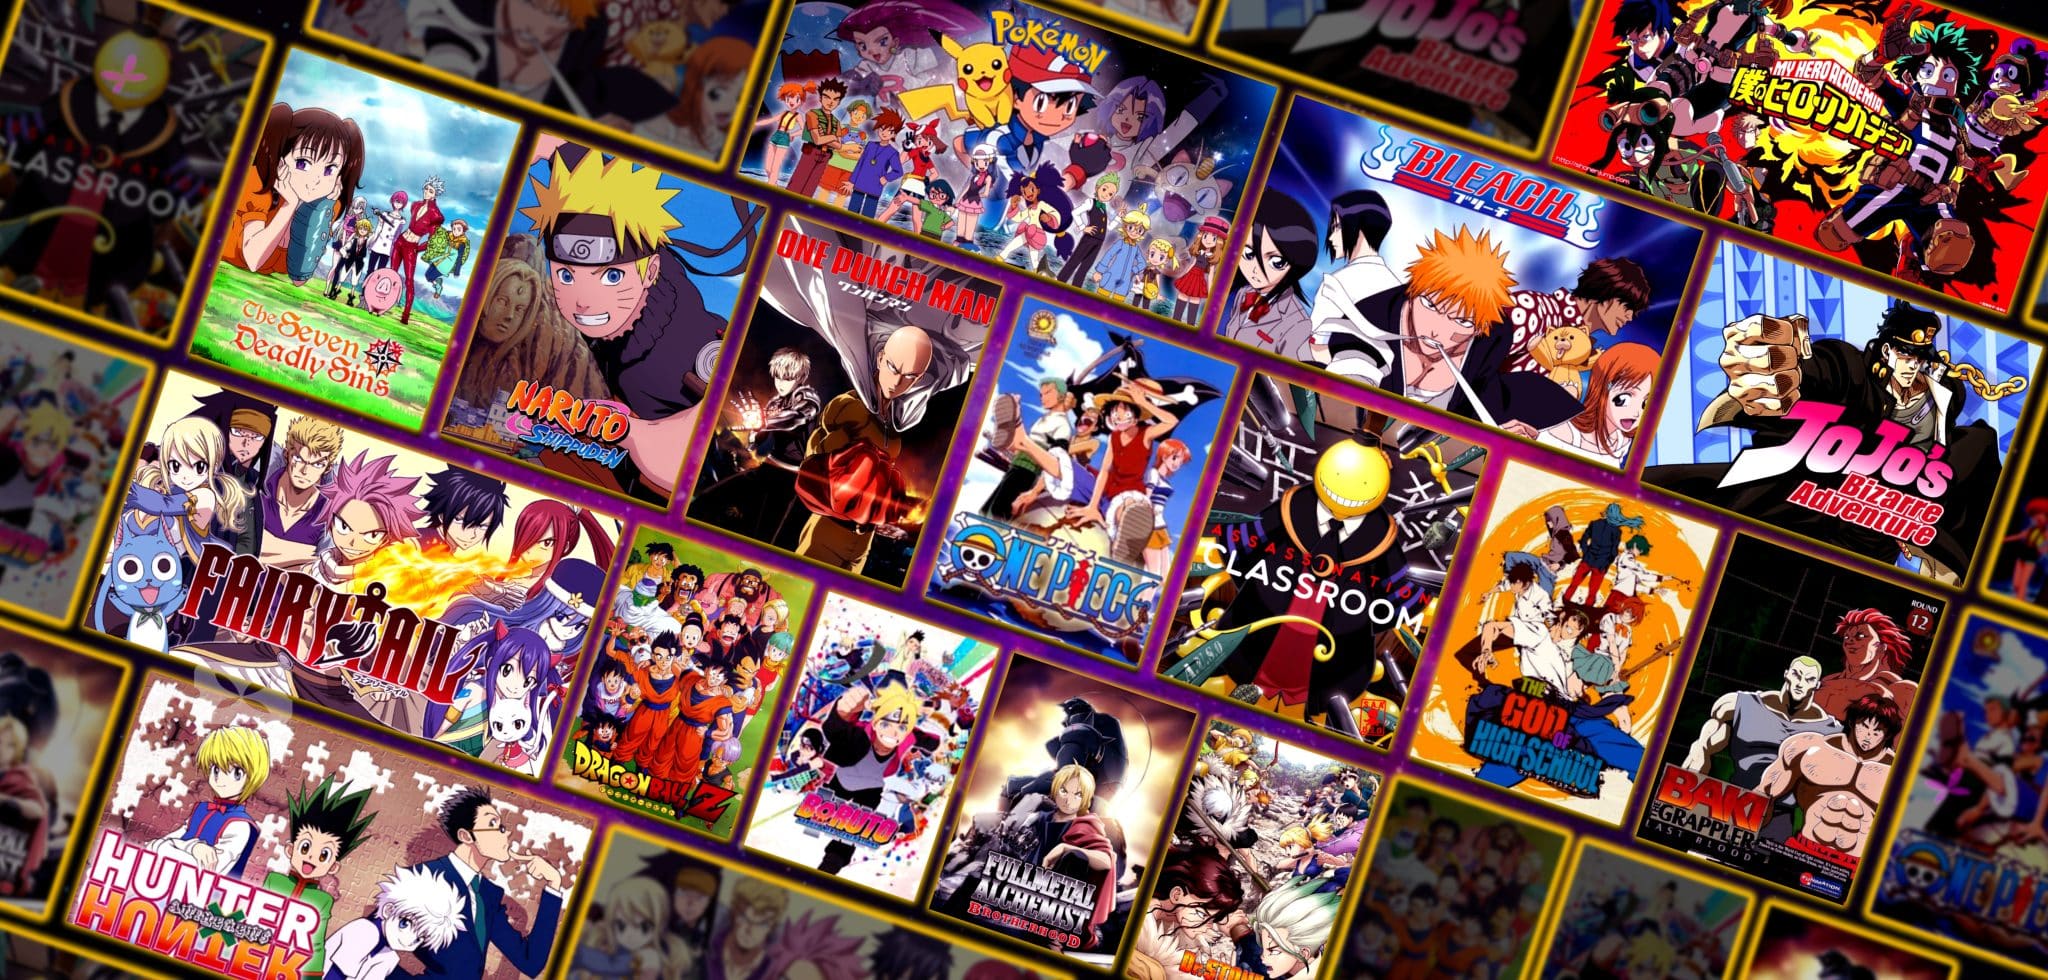 Best Anime Series Like Naruto  OppaiHoodiecom